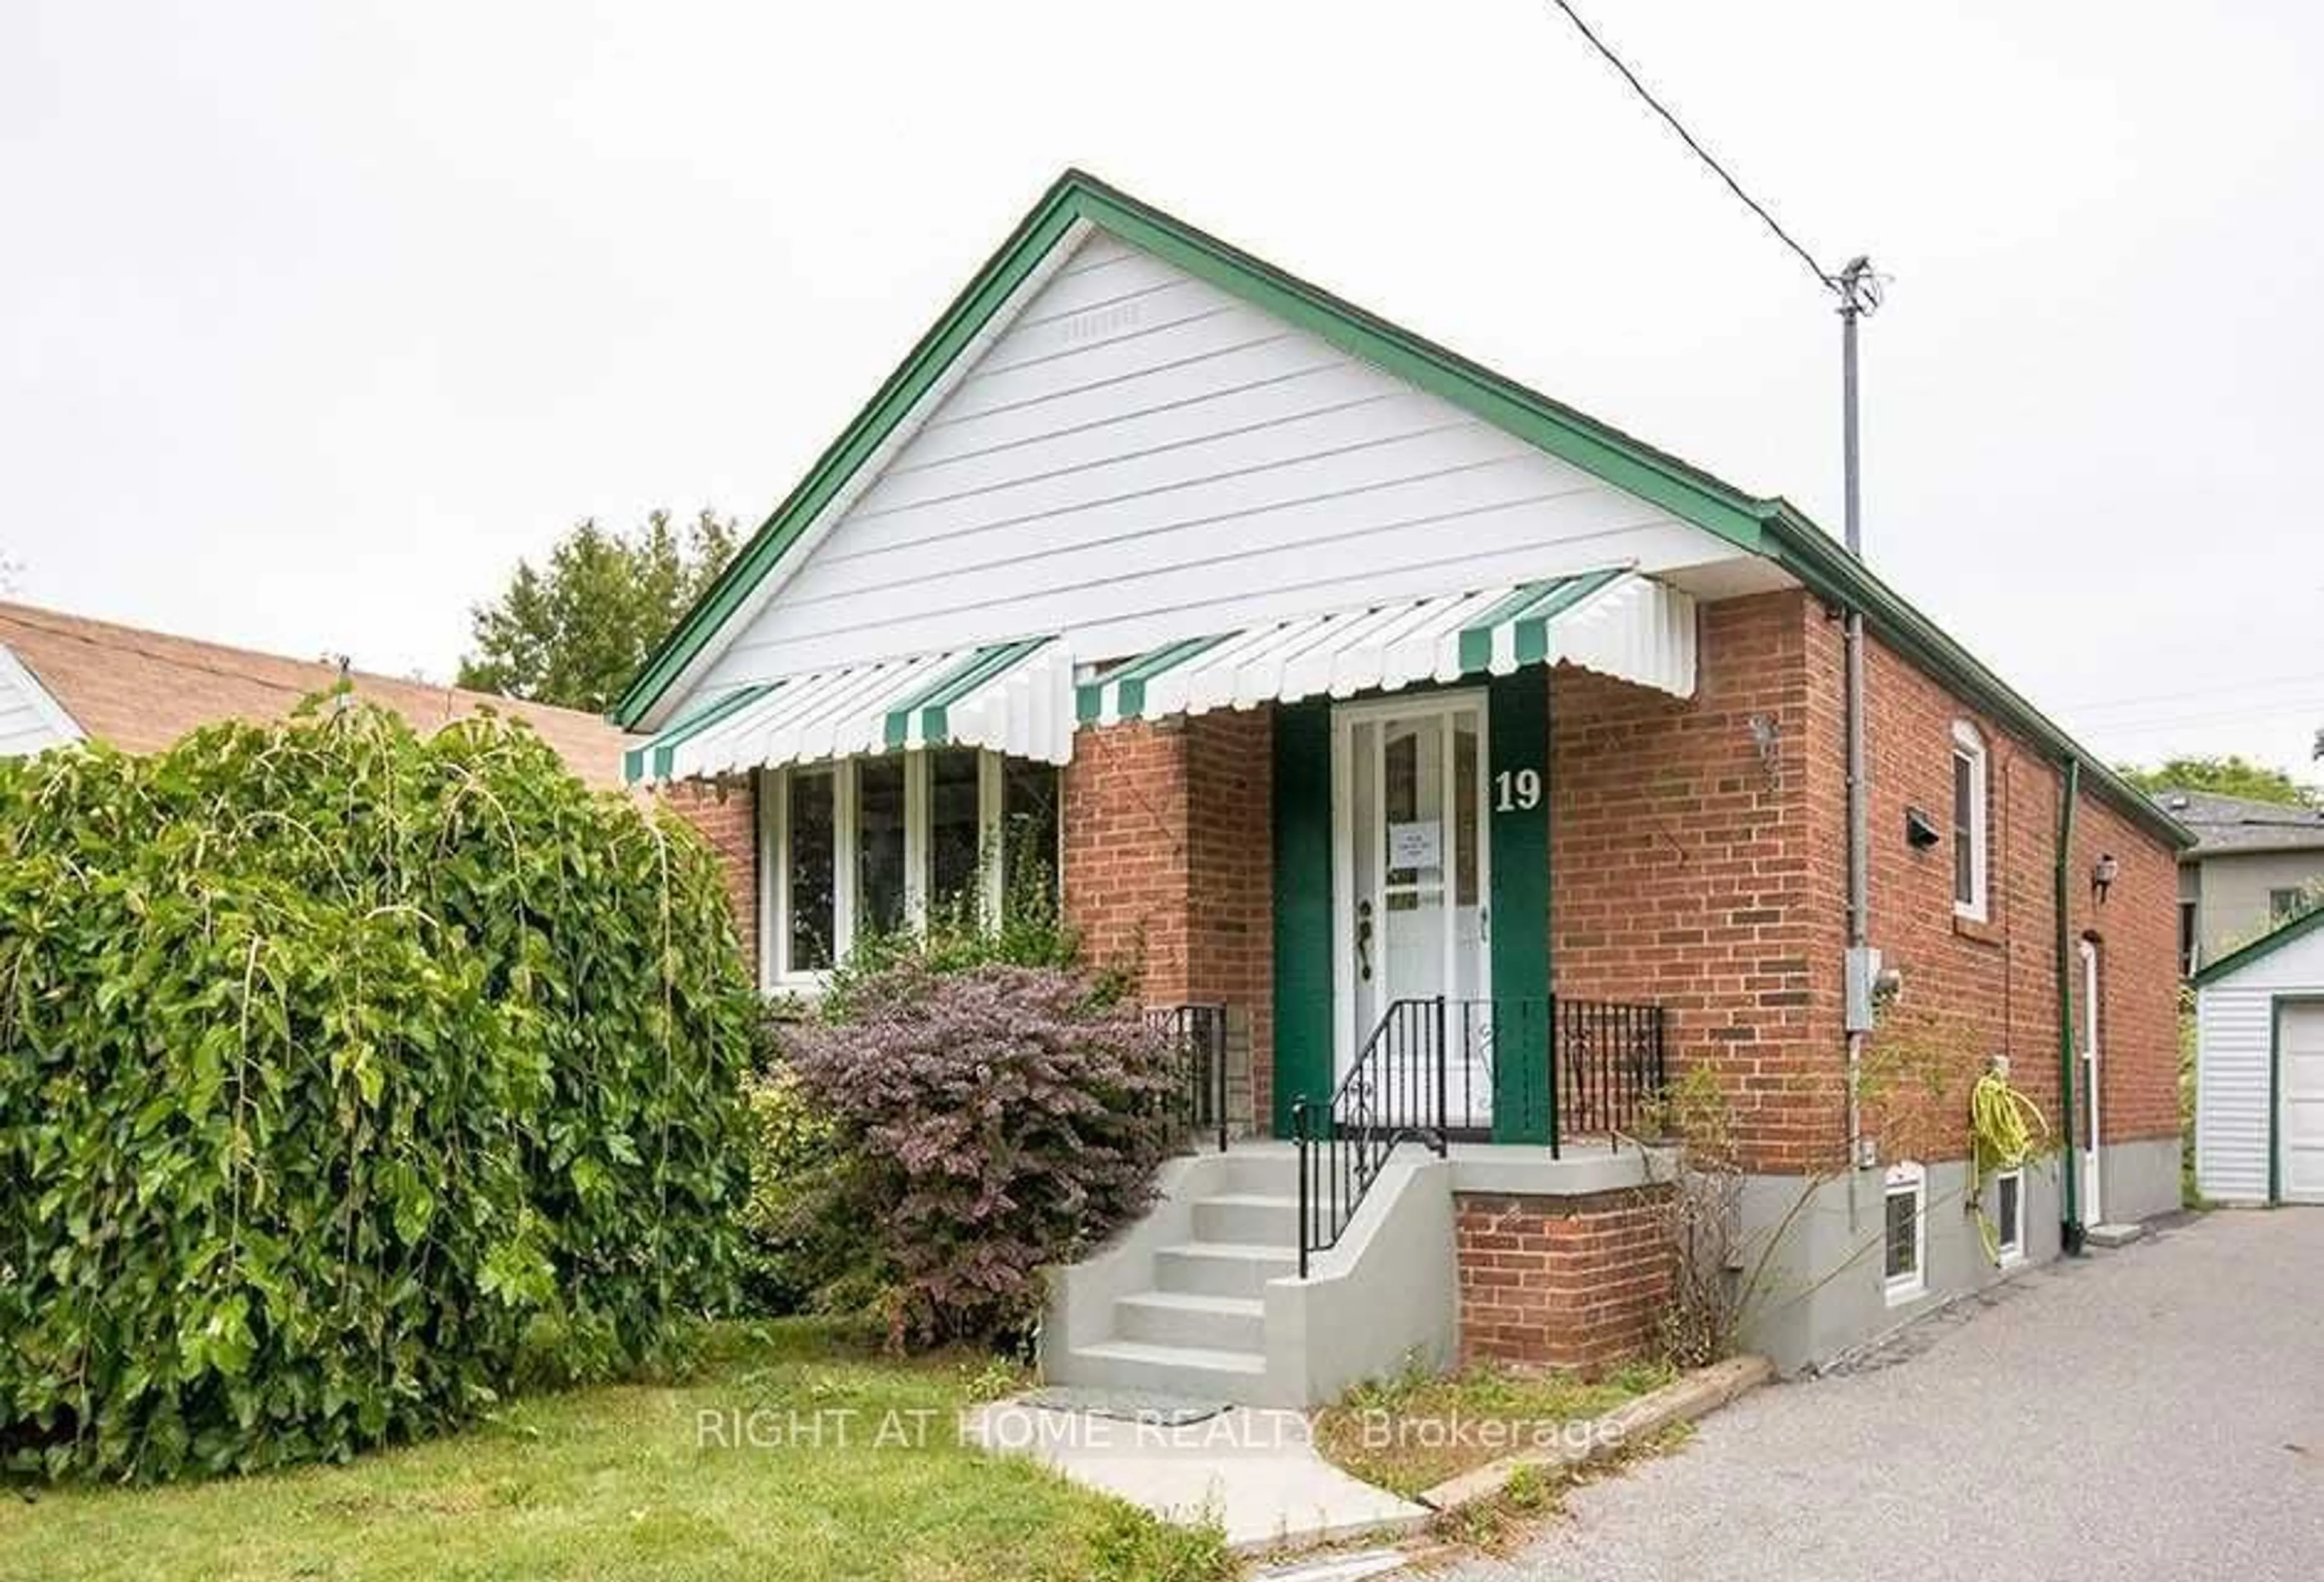 Home with brick exterior material for 19 Stellarton Rd, Toronto Ontario M1L 3C6